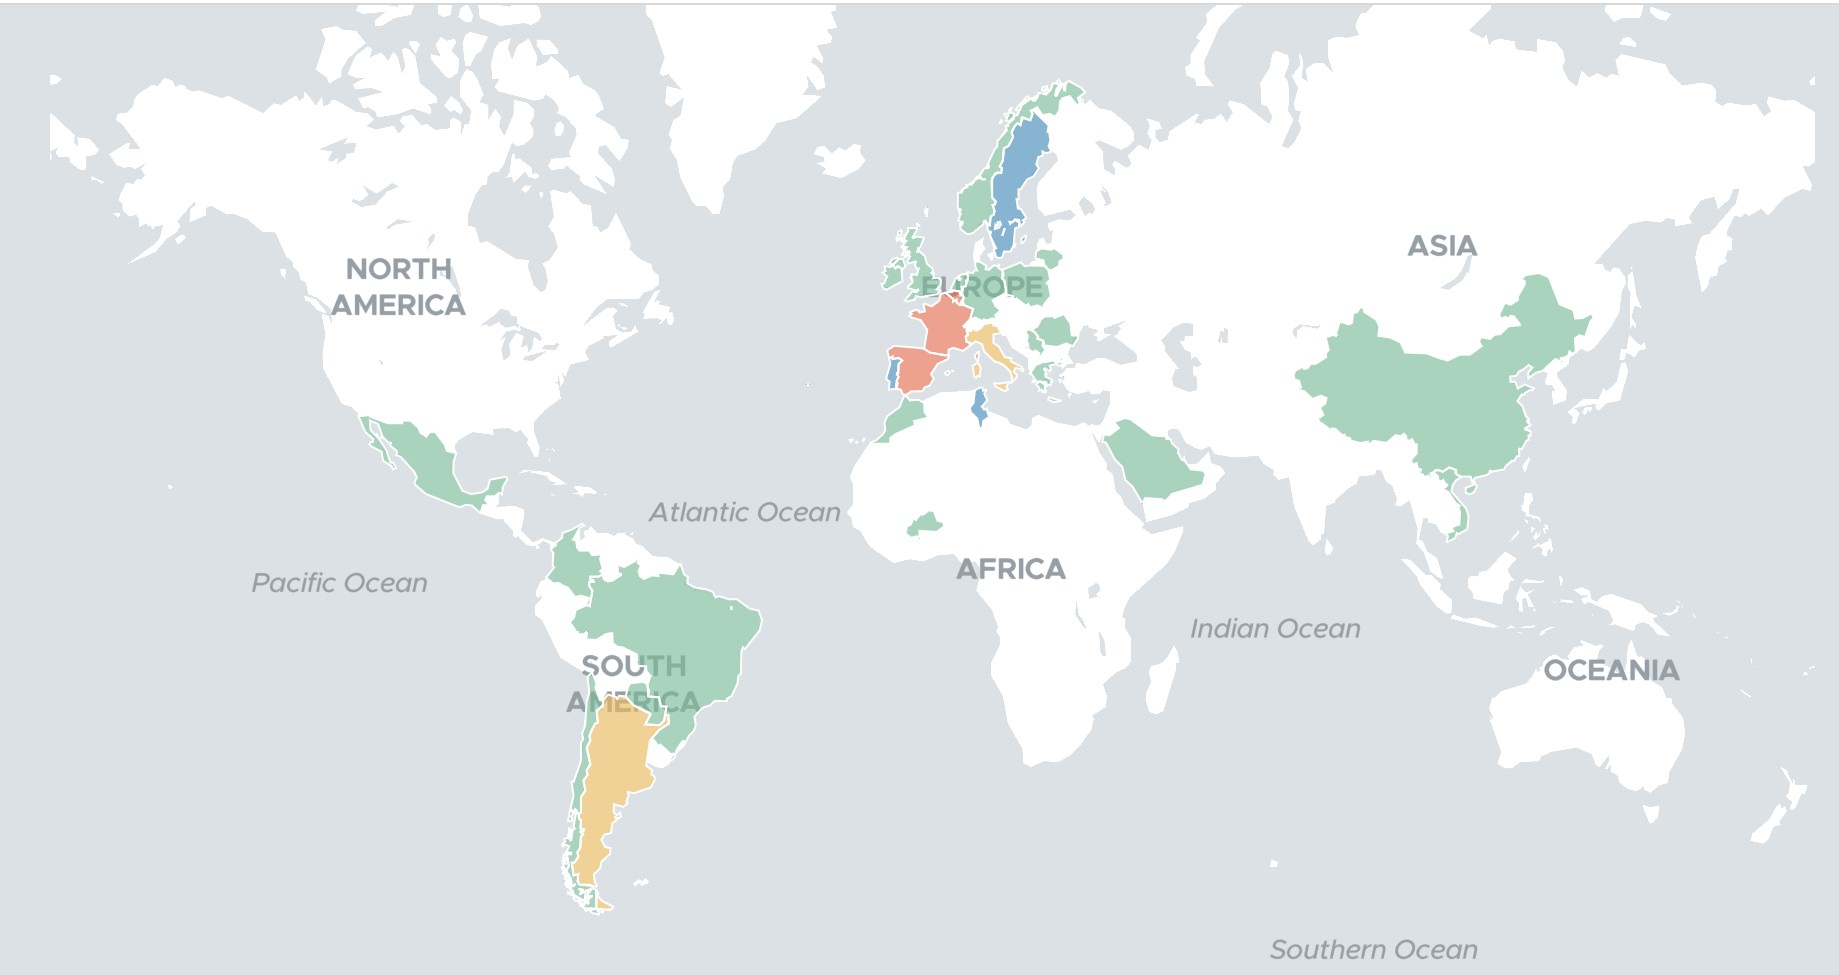 Ranking Padel : The nationalities present